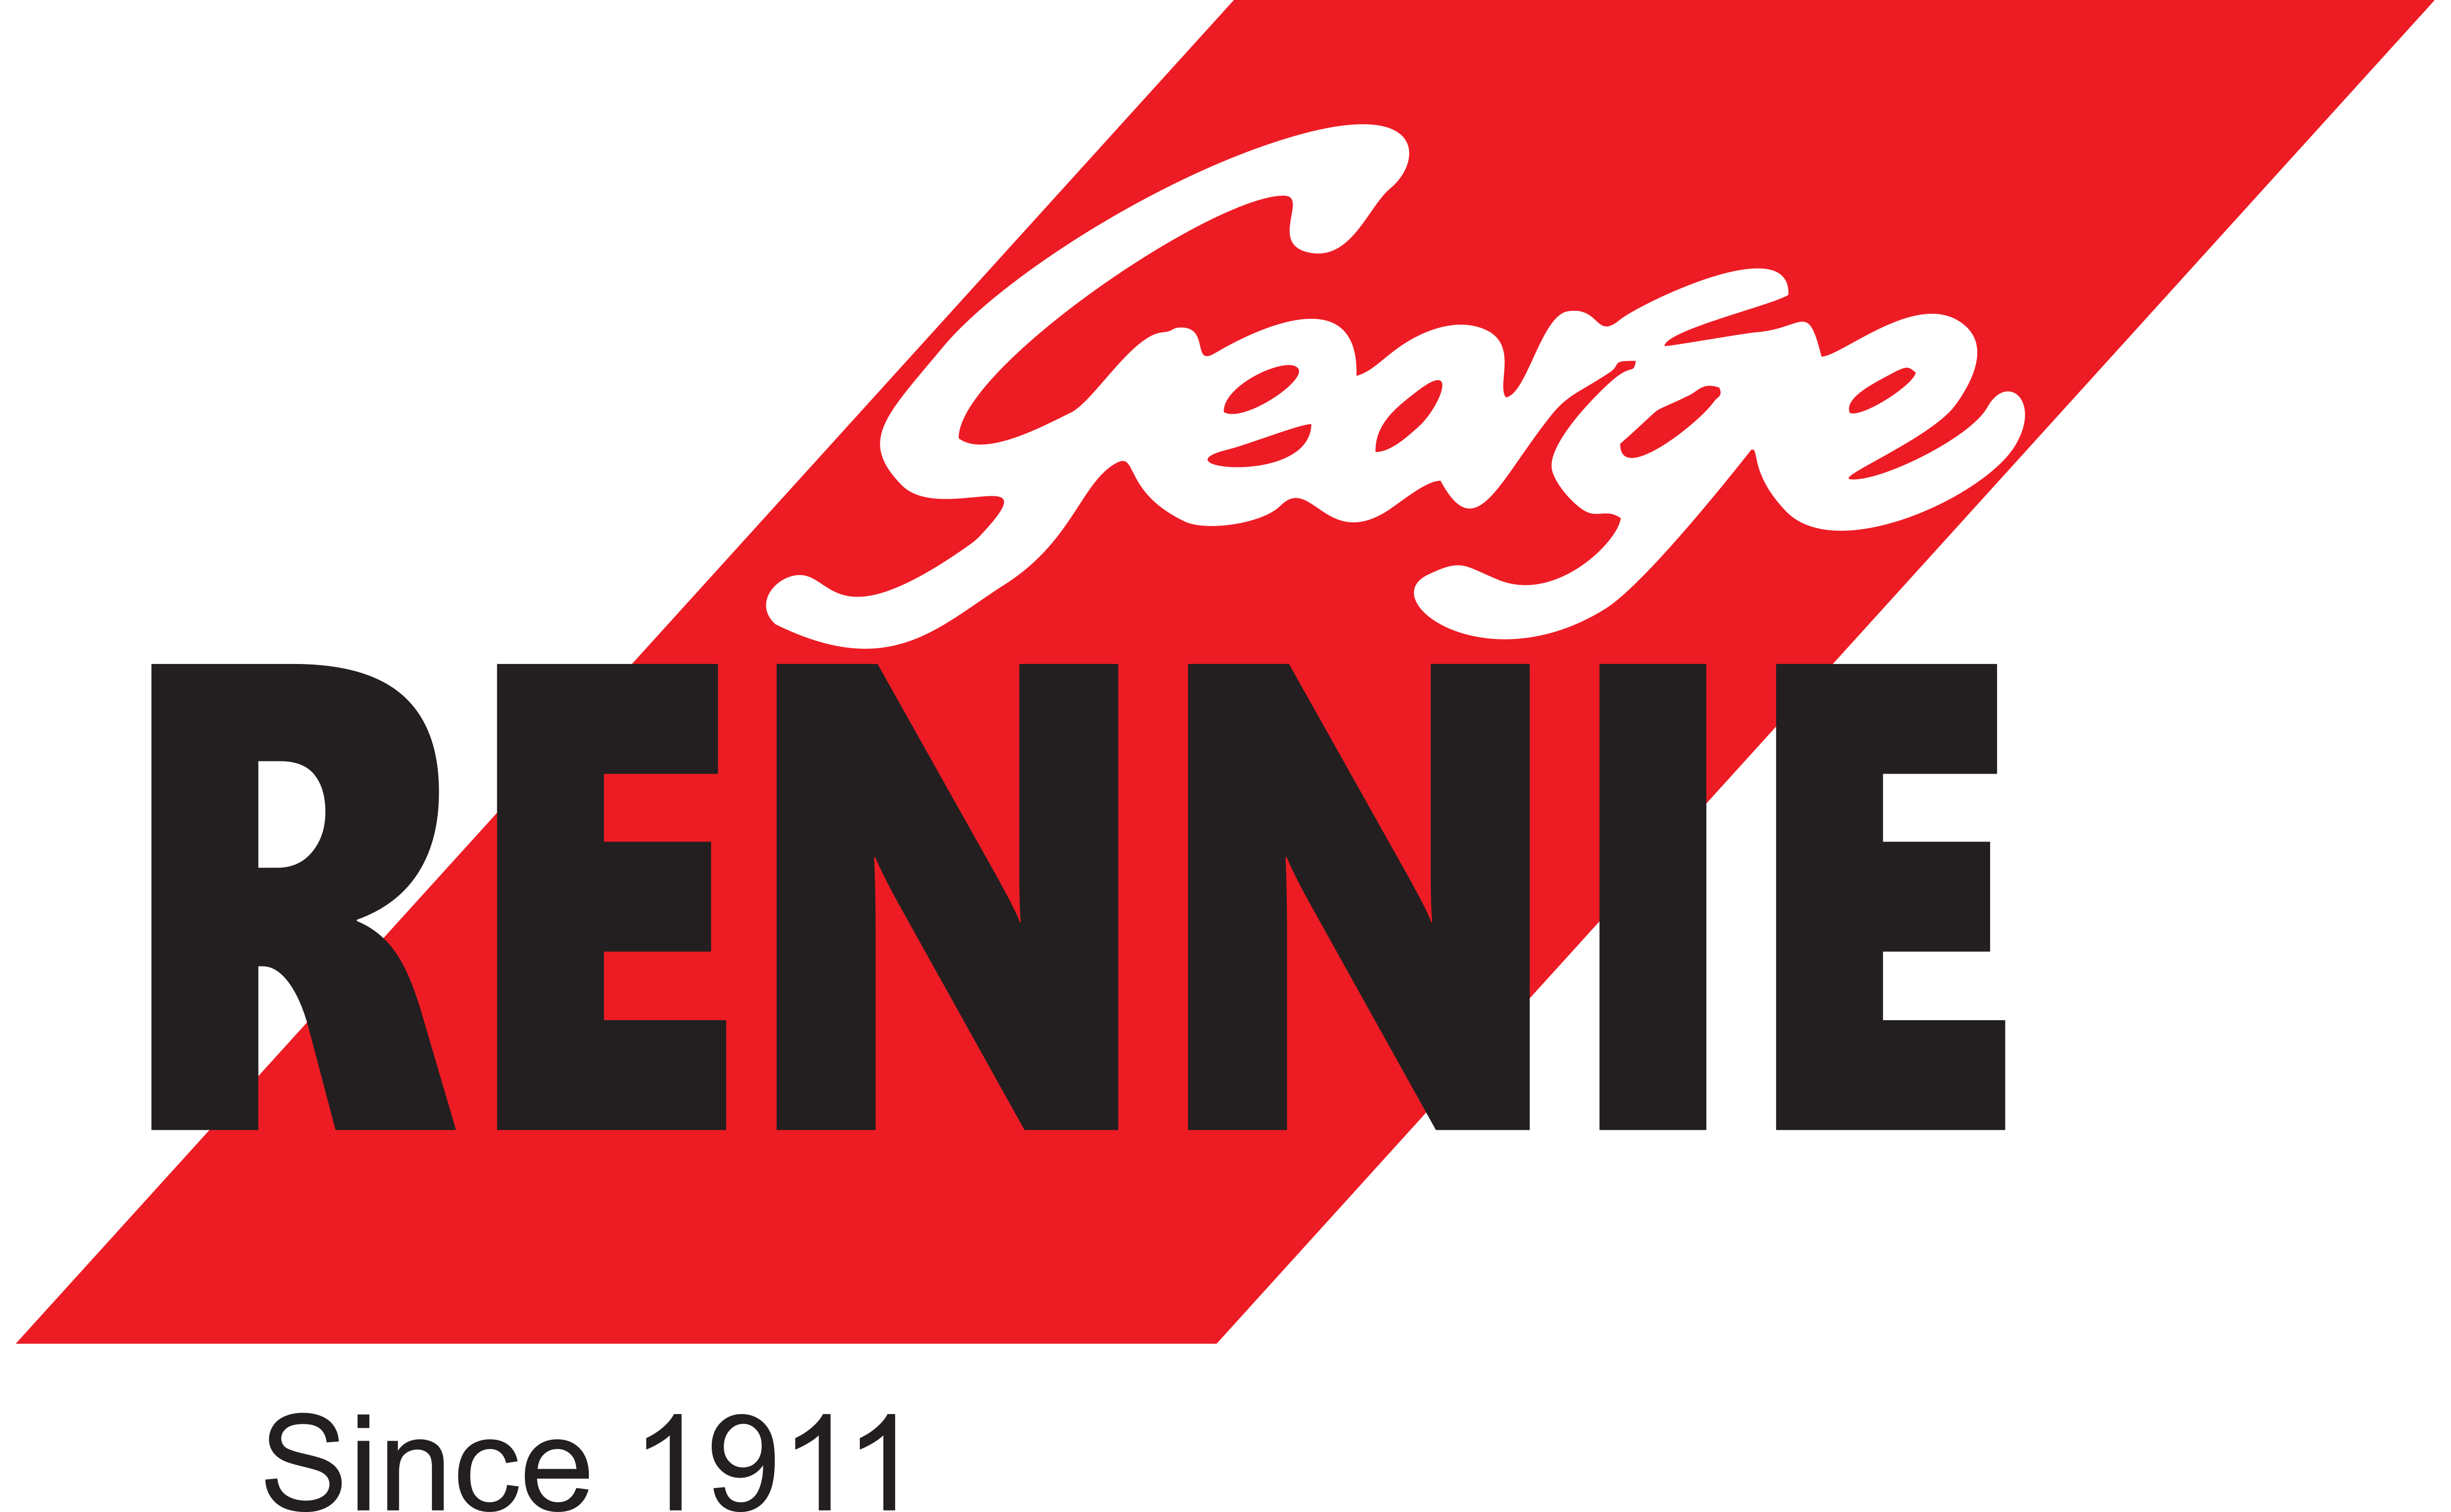 George Rennie